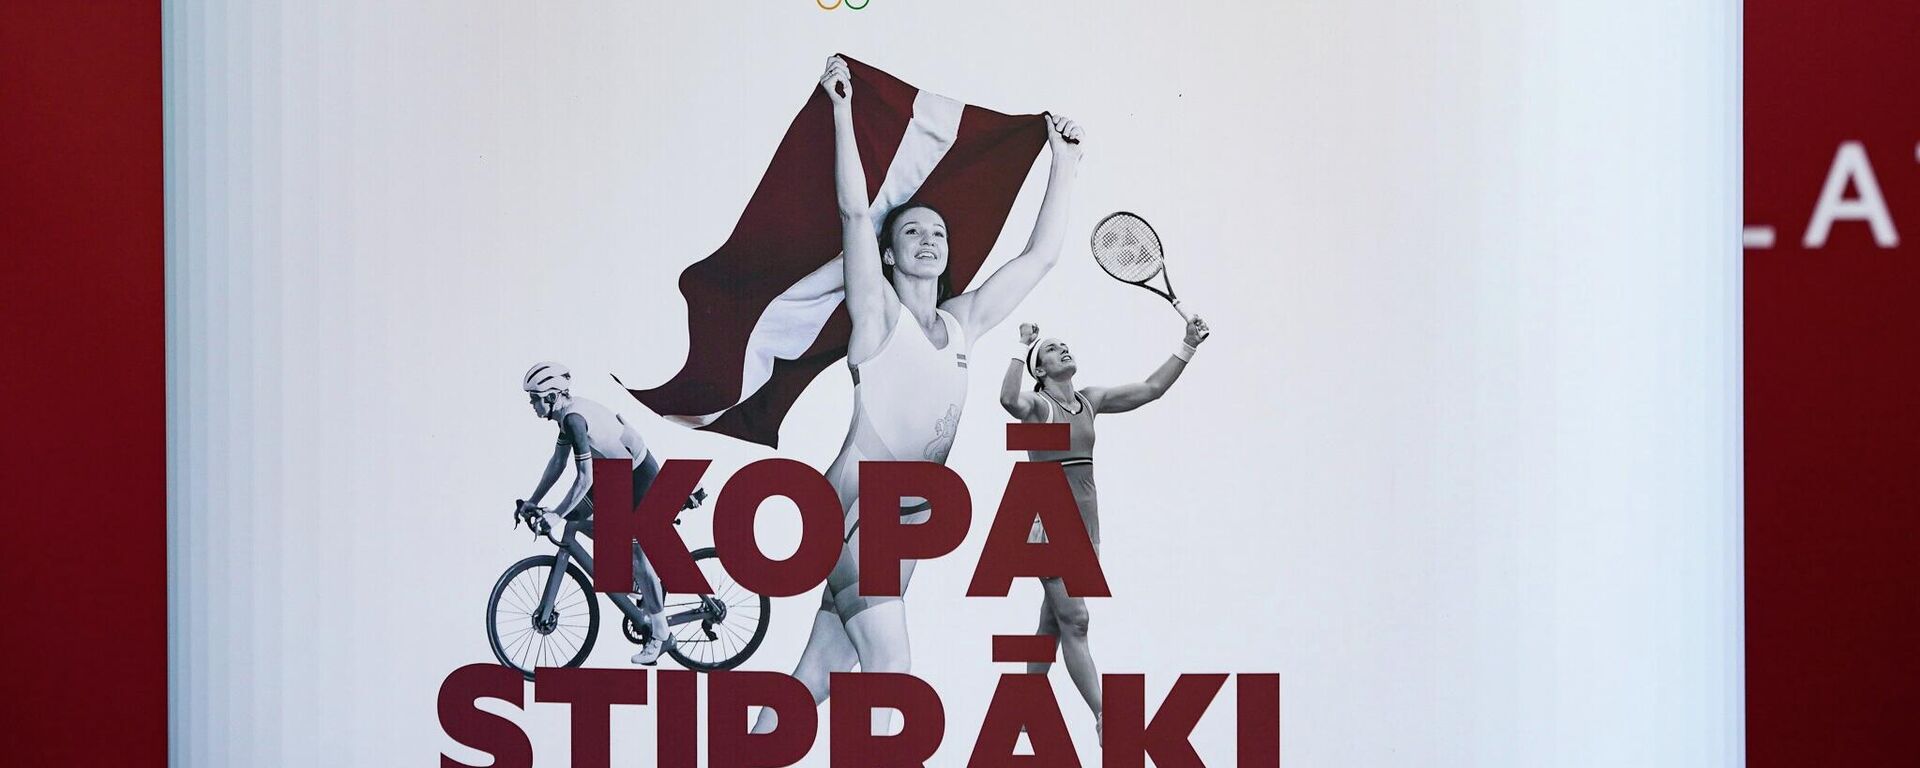 Плакат Латвийского олимпийского комитета в поддержку команды на Олимпиаде в Токио - Sputnik Латвия, 1920, 22.07.2021